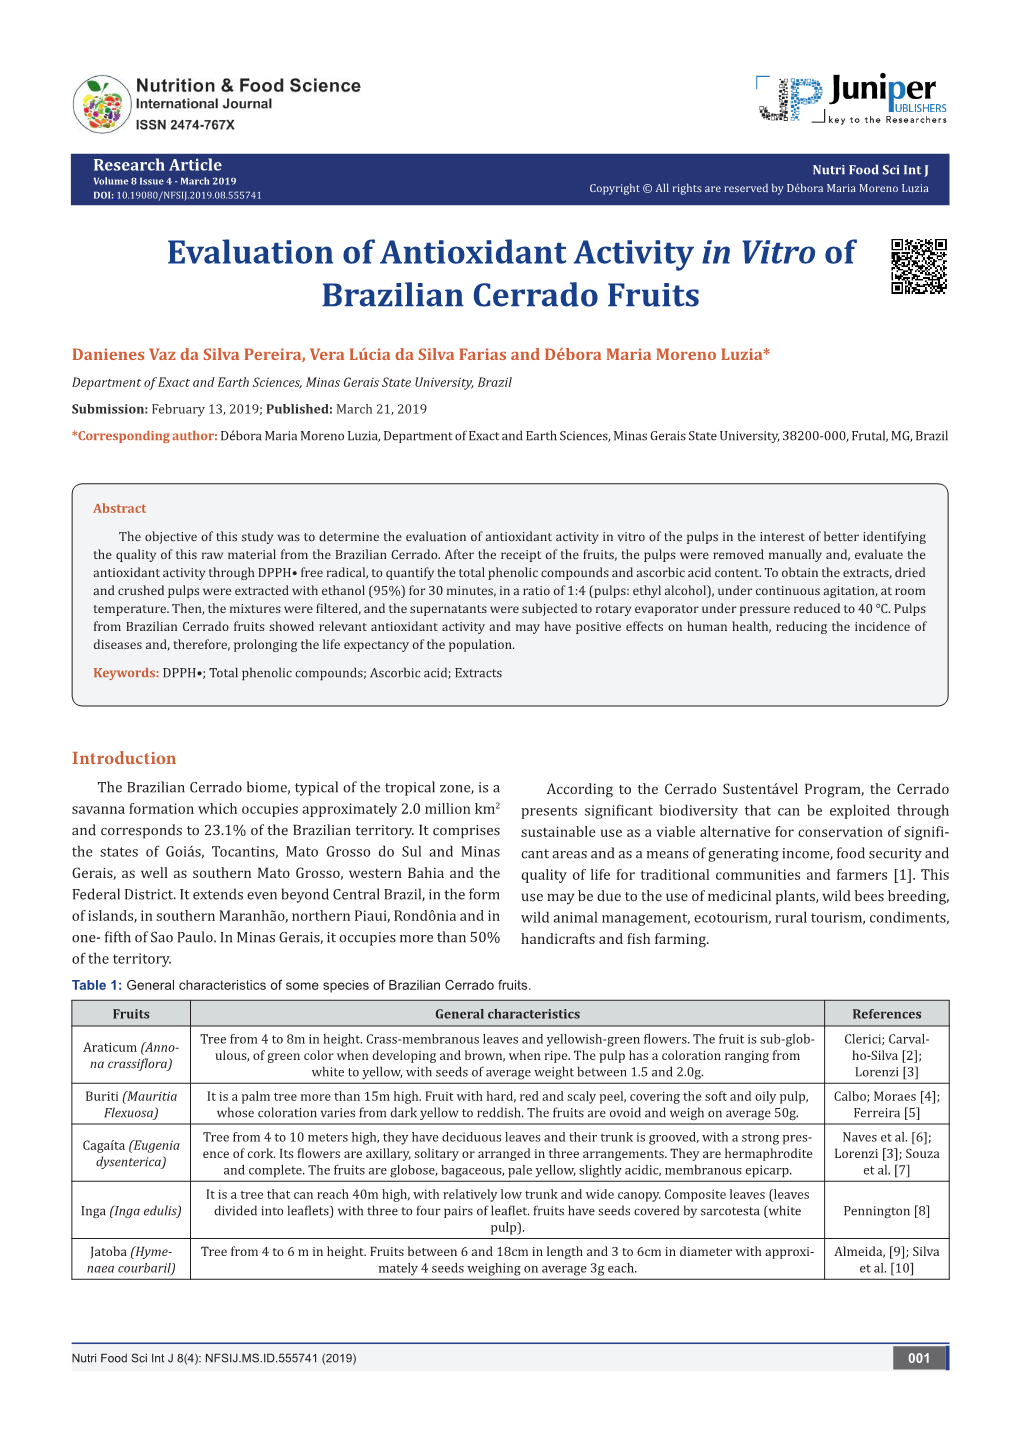 Evaluation of Antioxidant Activity in Vitro of Brazilian Cerrado Fruits